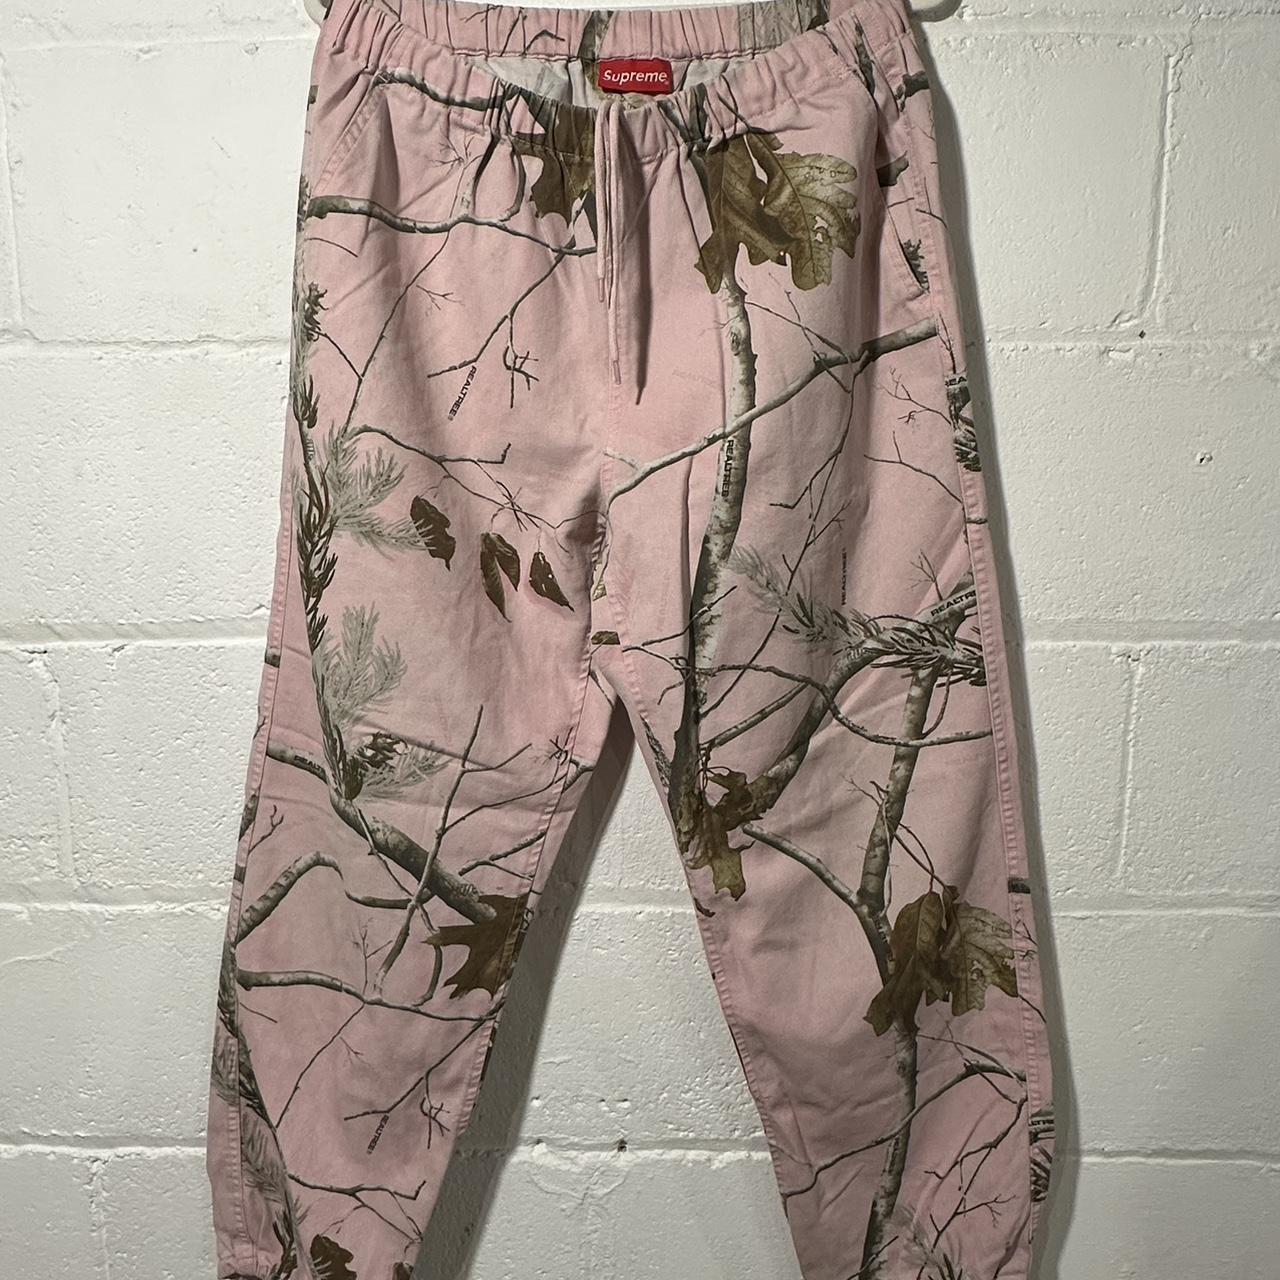 Ladies Lounge Pants in Realtree AP Black Camo Print